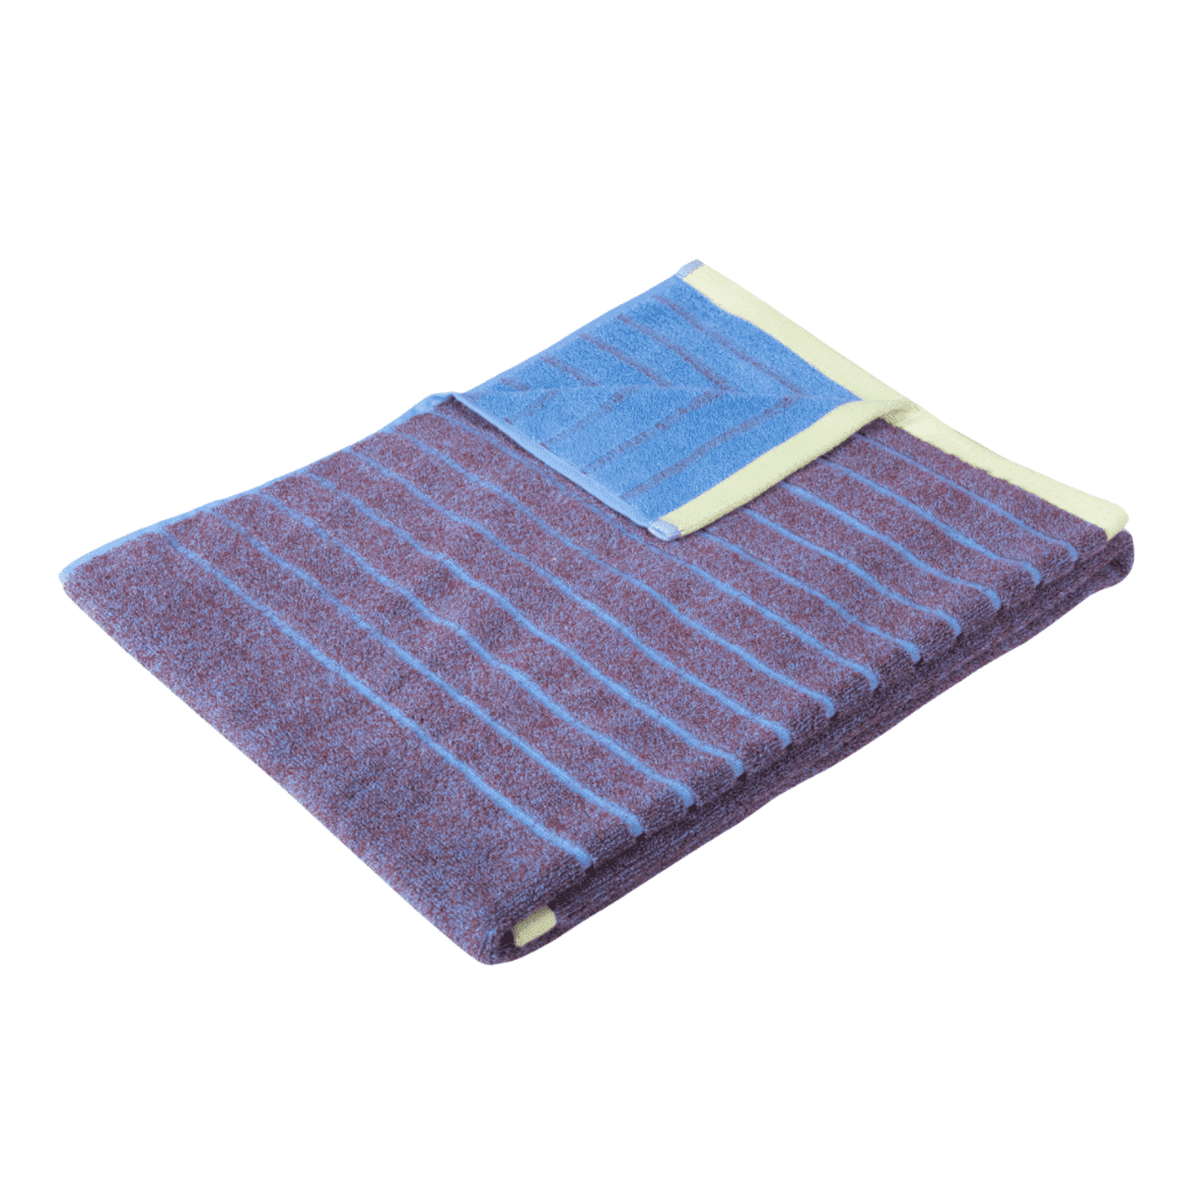 Se Hübsch Promenade towel large - 70x140cm - purple/blue hos Bad&Design